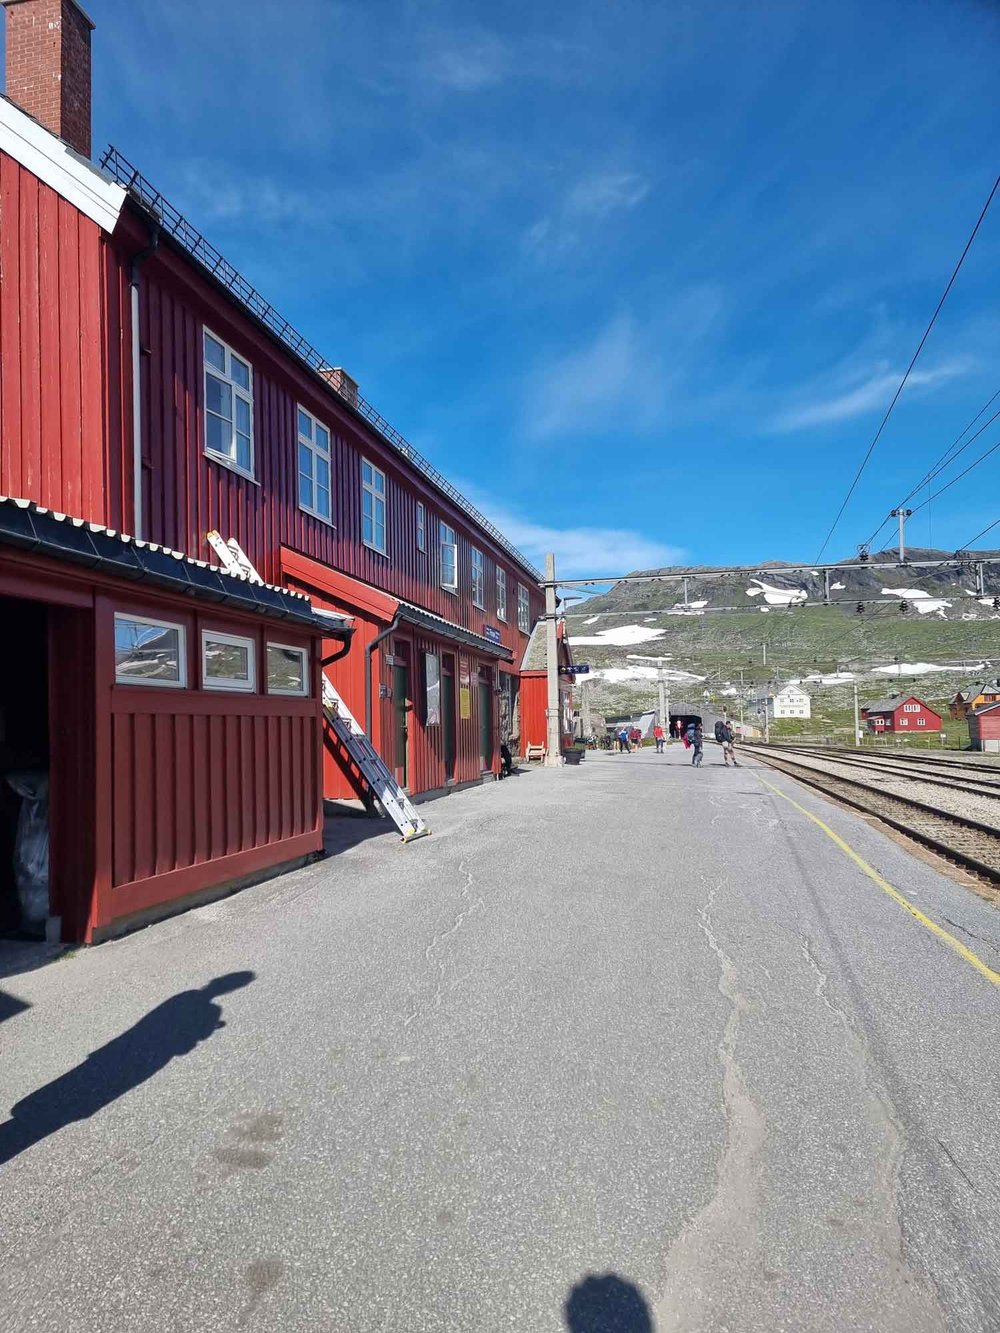 Riding-Rallarvegen-Norways-best-cycle-route-r.jpg